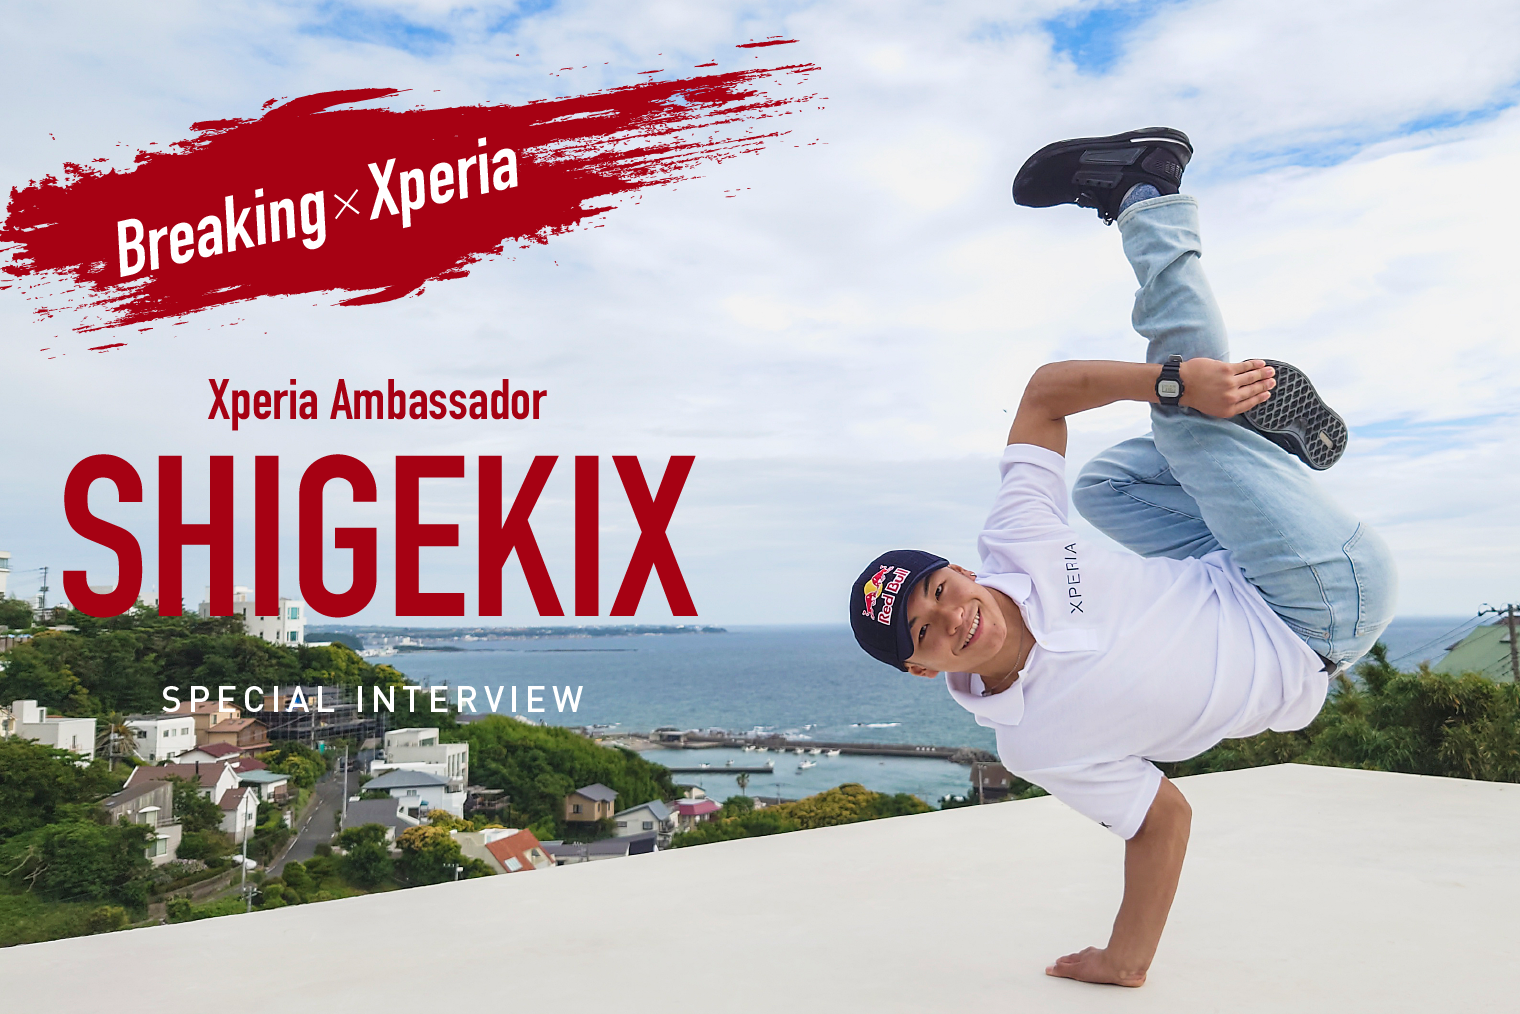 oy Shigekix Xperia 特別インタビュー アンバサダーに就任した oy Shigekixが語るブレイクダンサーとしてのキャリアとライフスタイル Fineplay